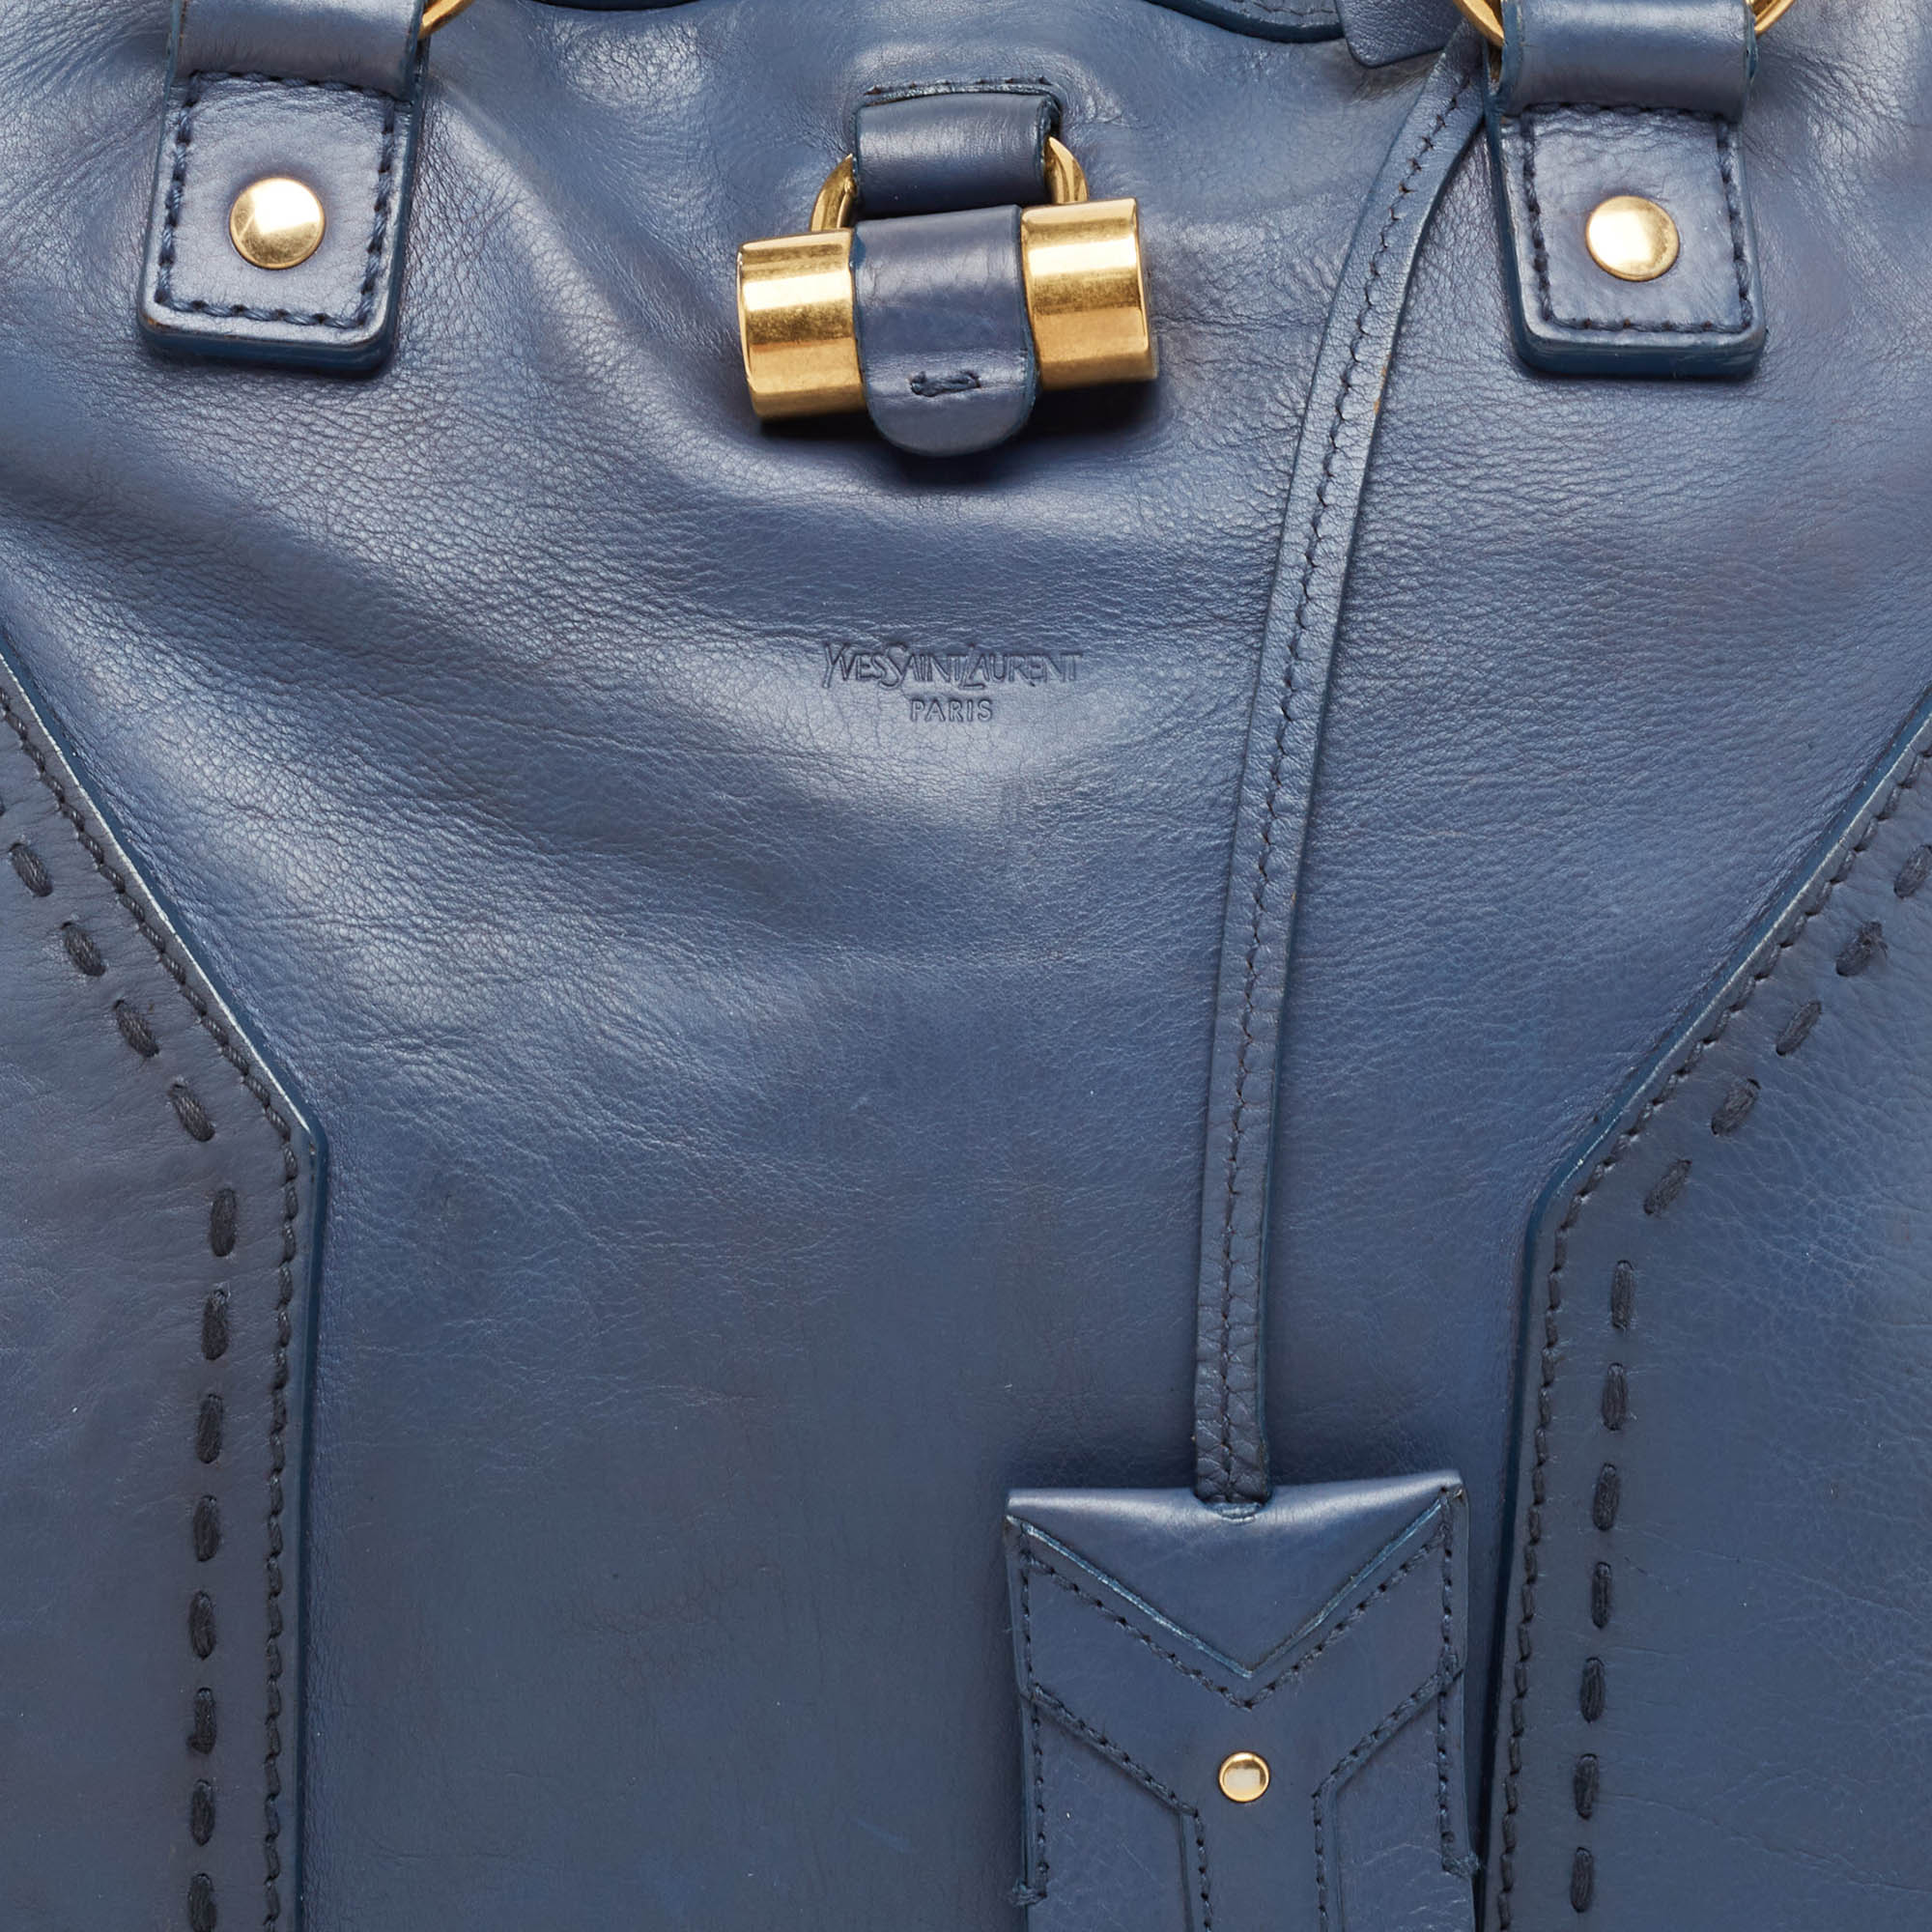 Yves Saint Laurent Blue Leather Oversized Muse Bag